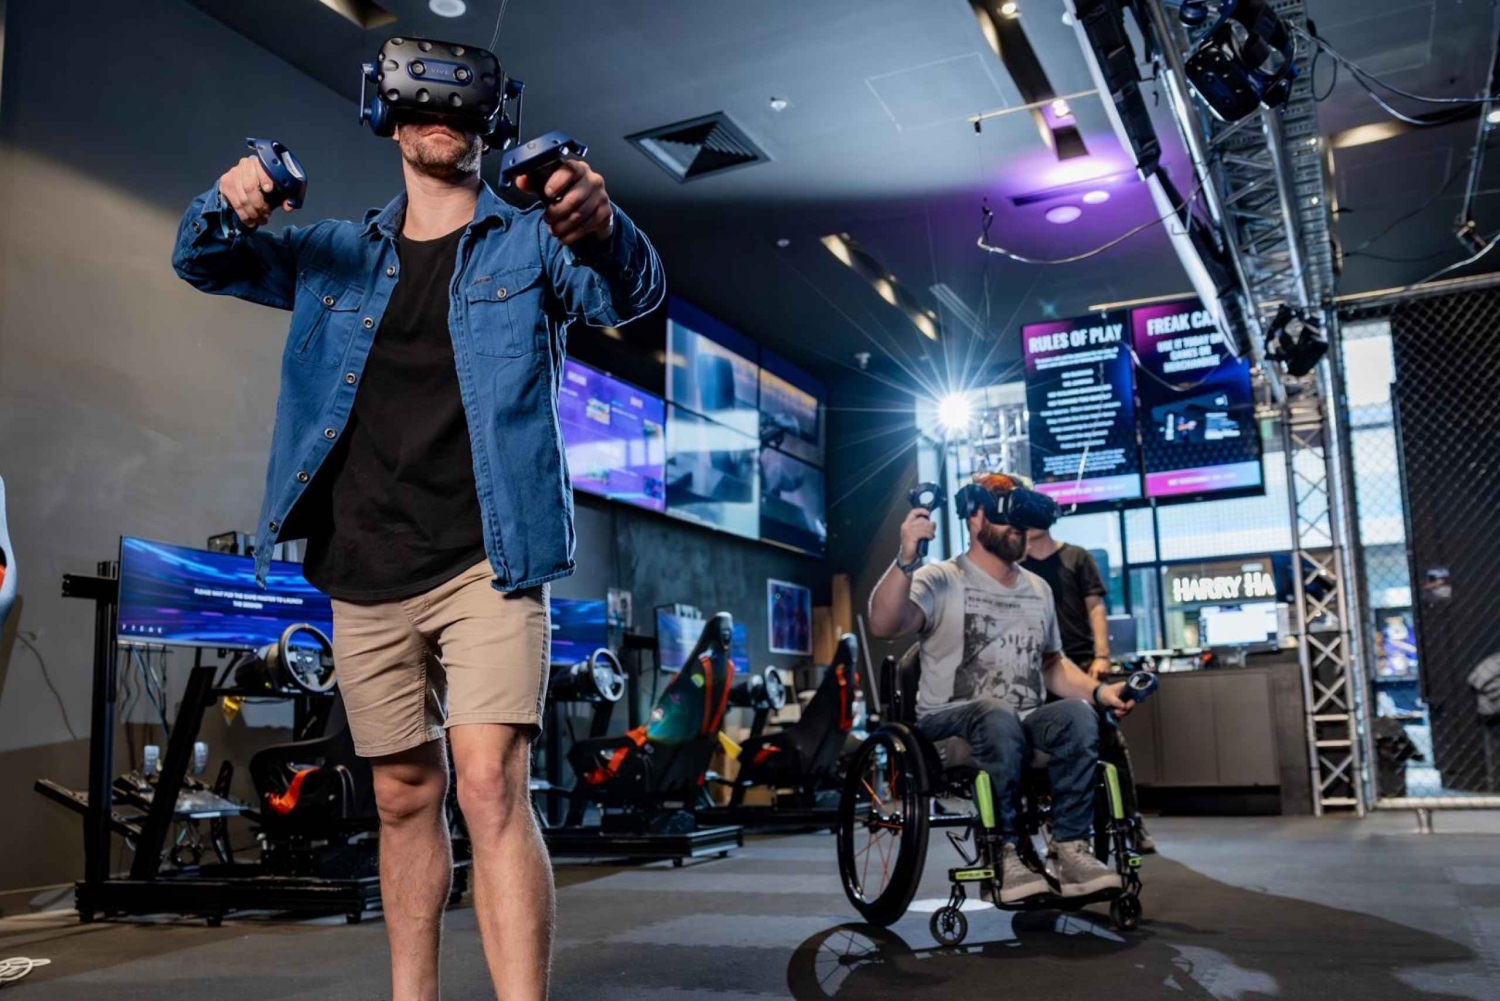 Penrith: 1 Hour Virtual Reality Arcade Experience